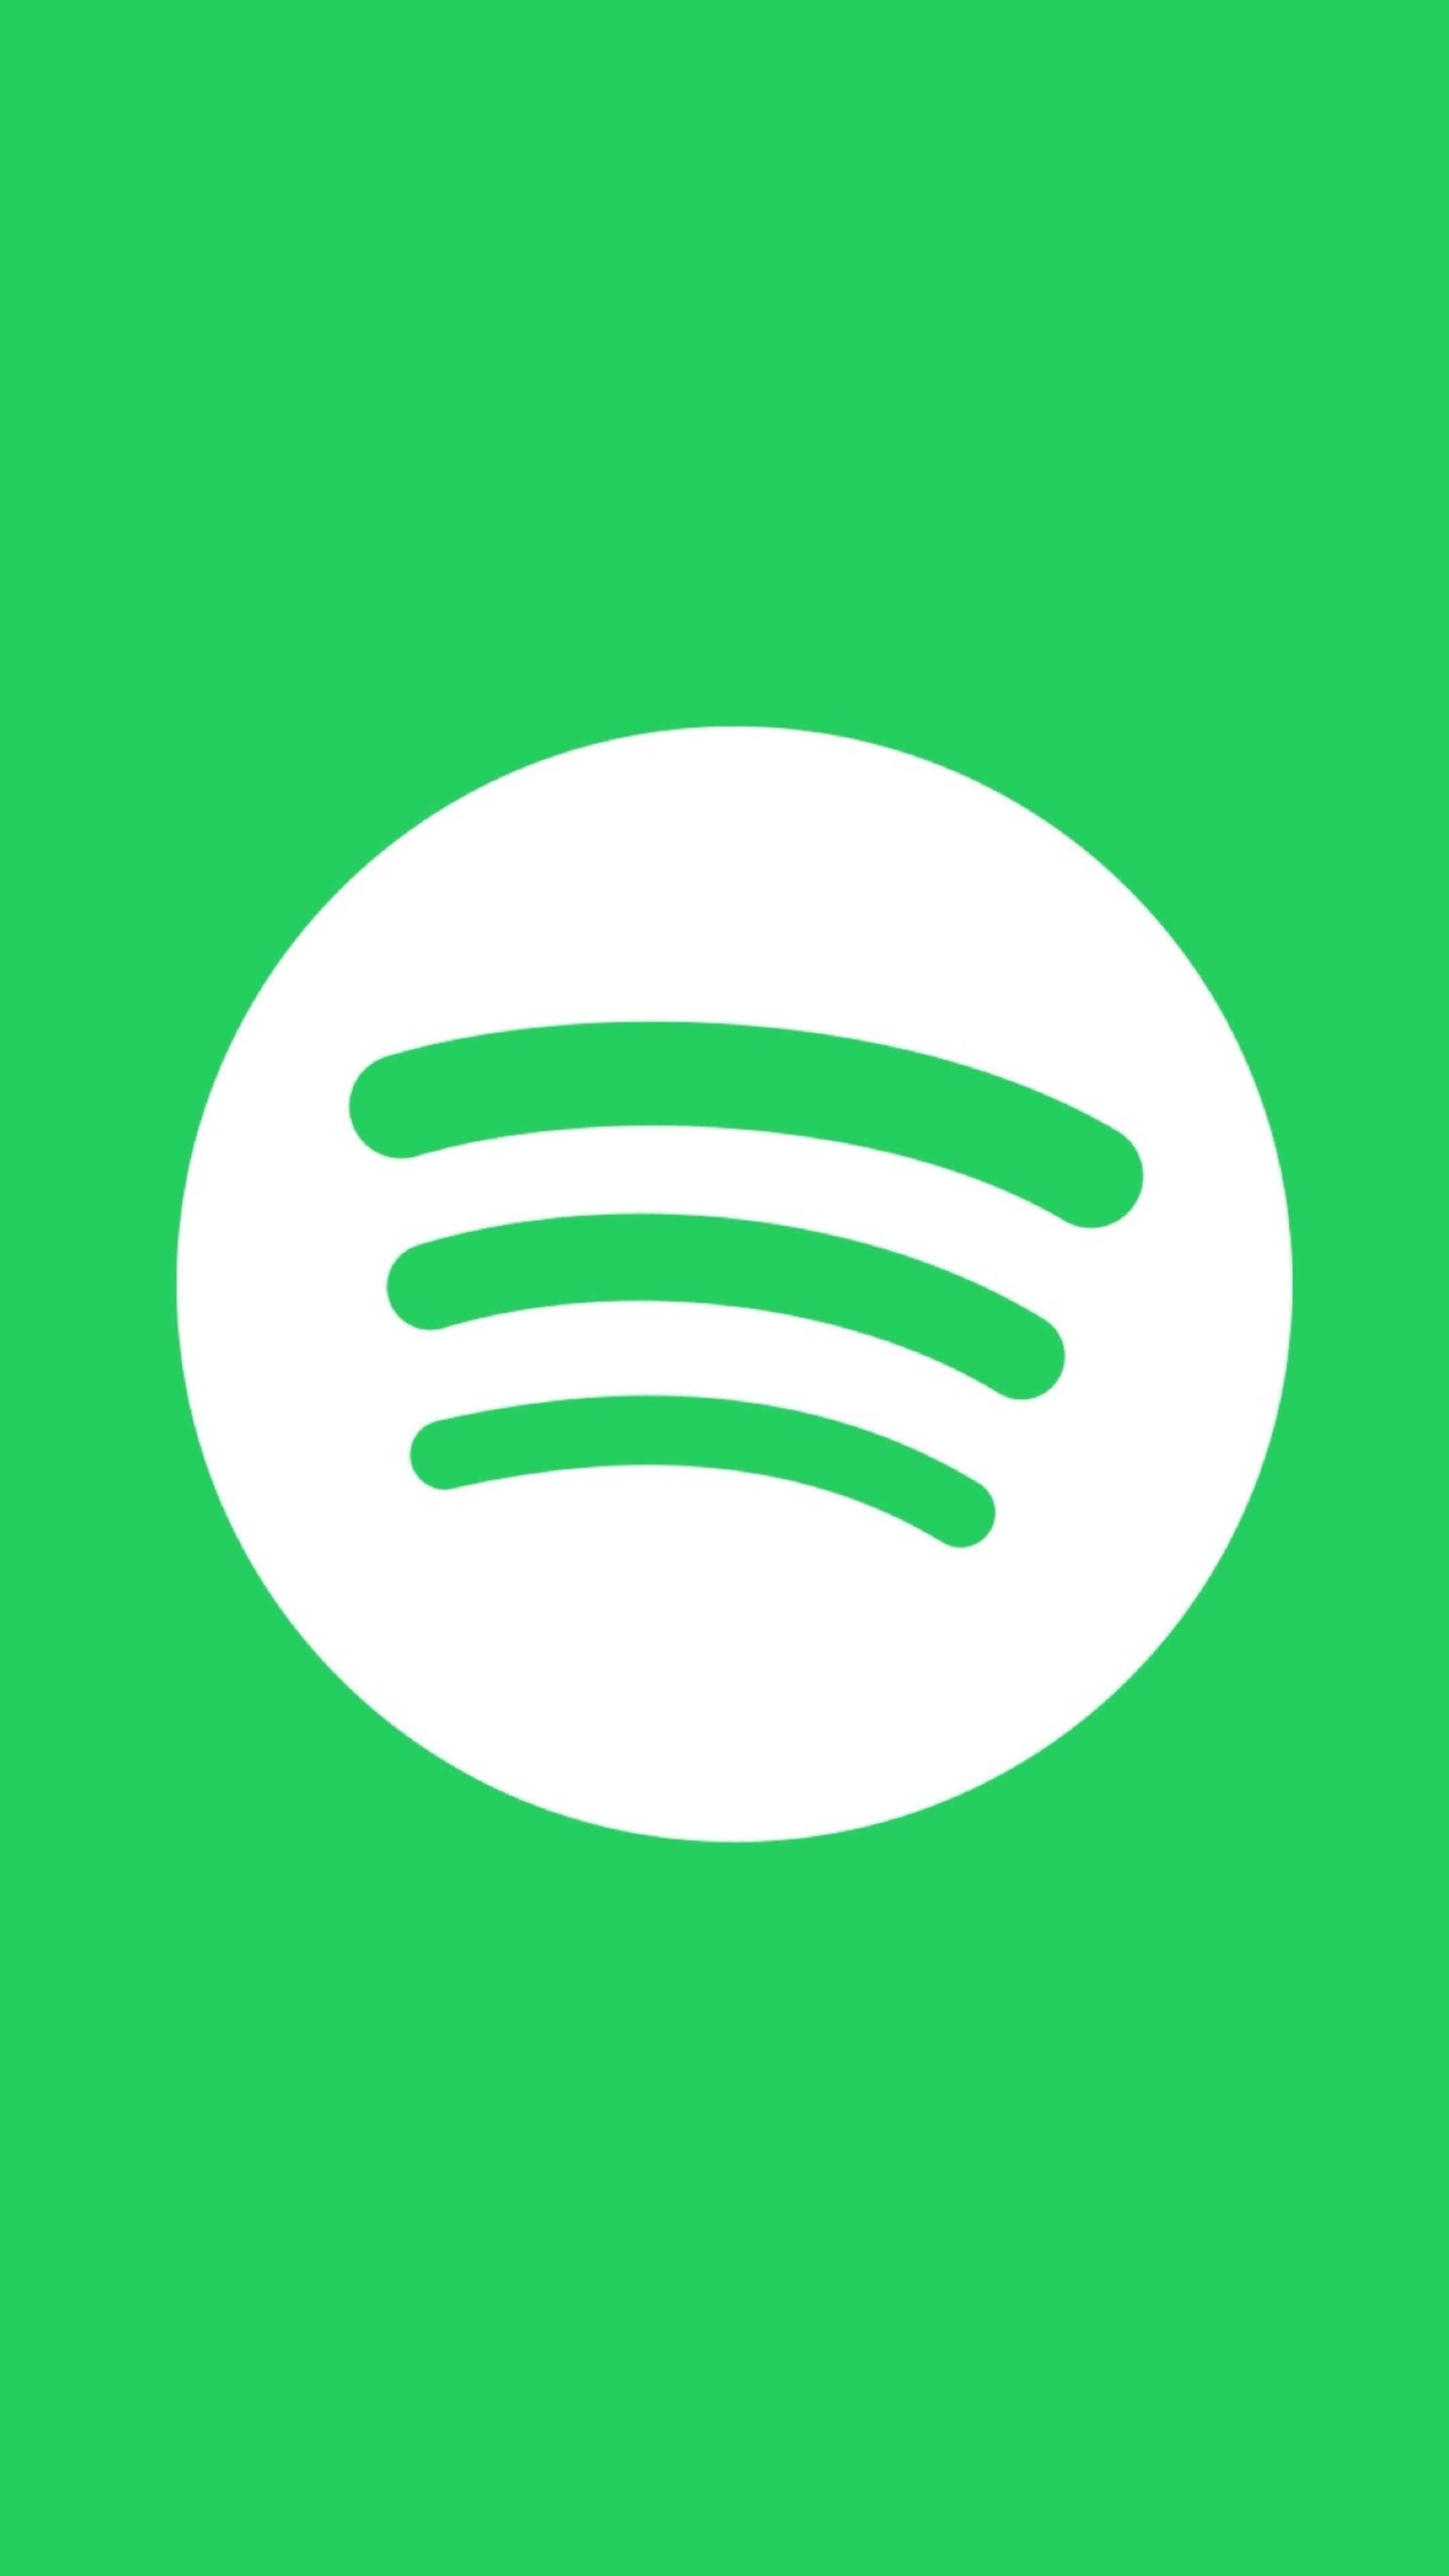 Spotify: A digital music, podcast, and video service, Logotype. 2160x3840 4K Background.